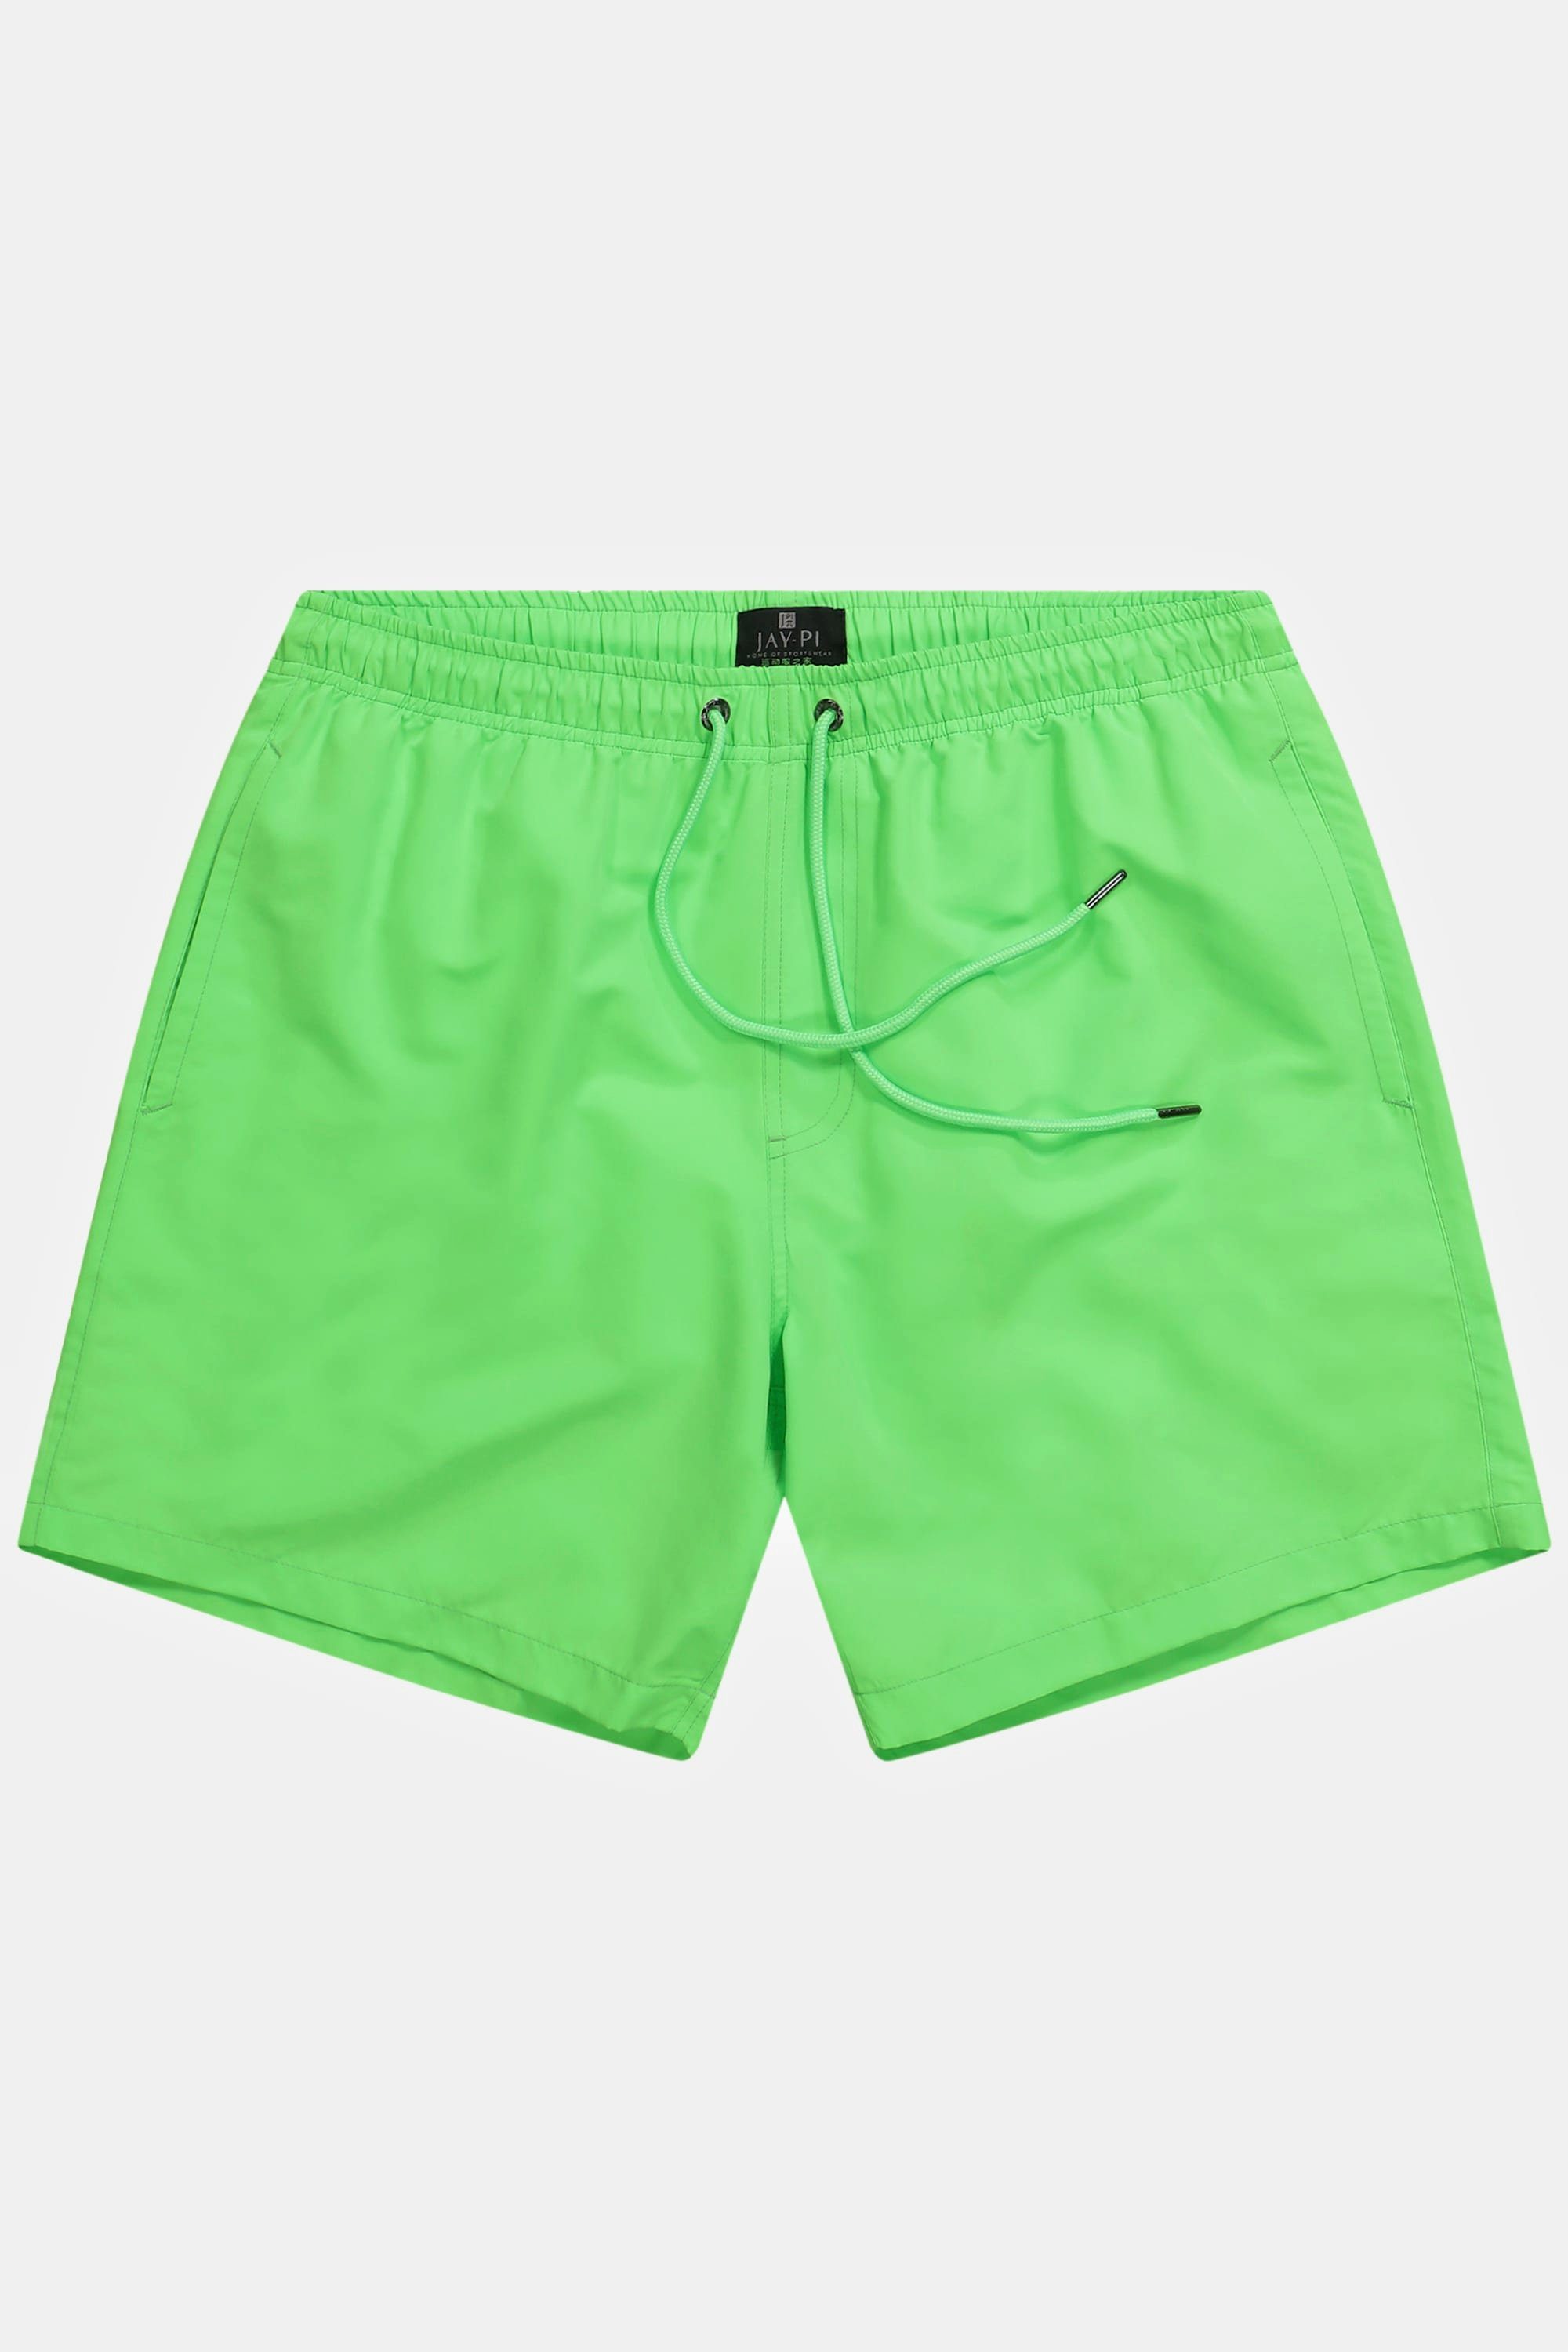 JP1880 Badehose Badeshorts grün Beachwear Zipptasche Elastikbund